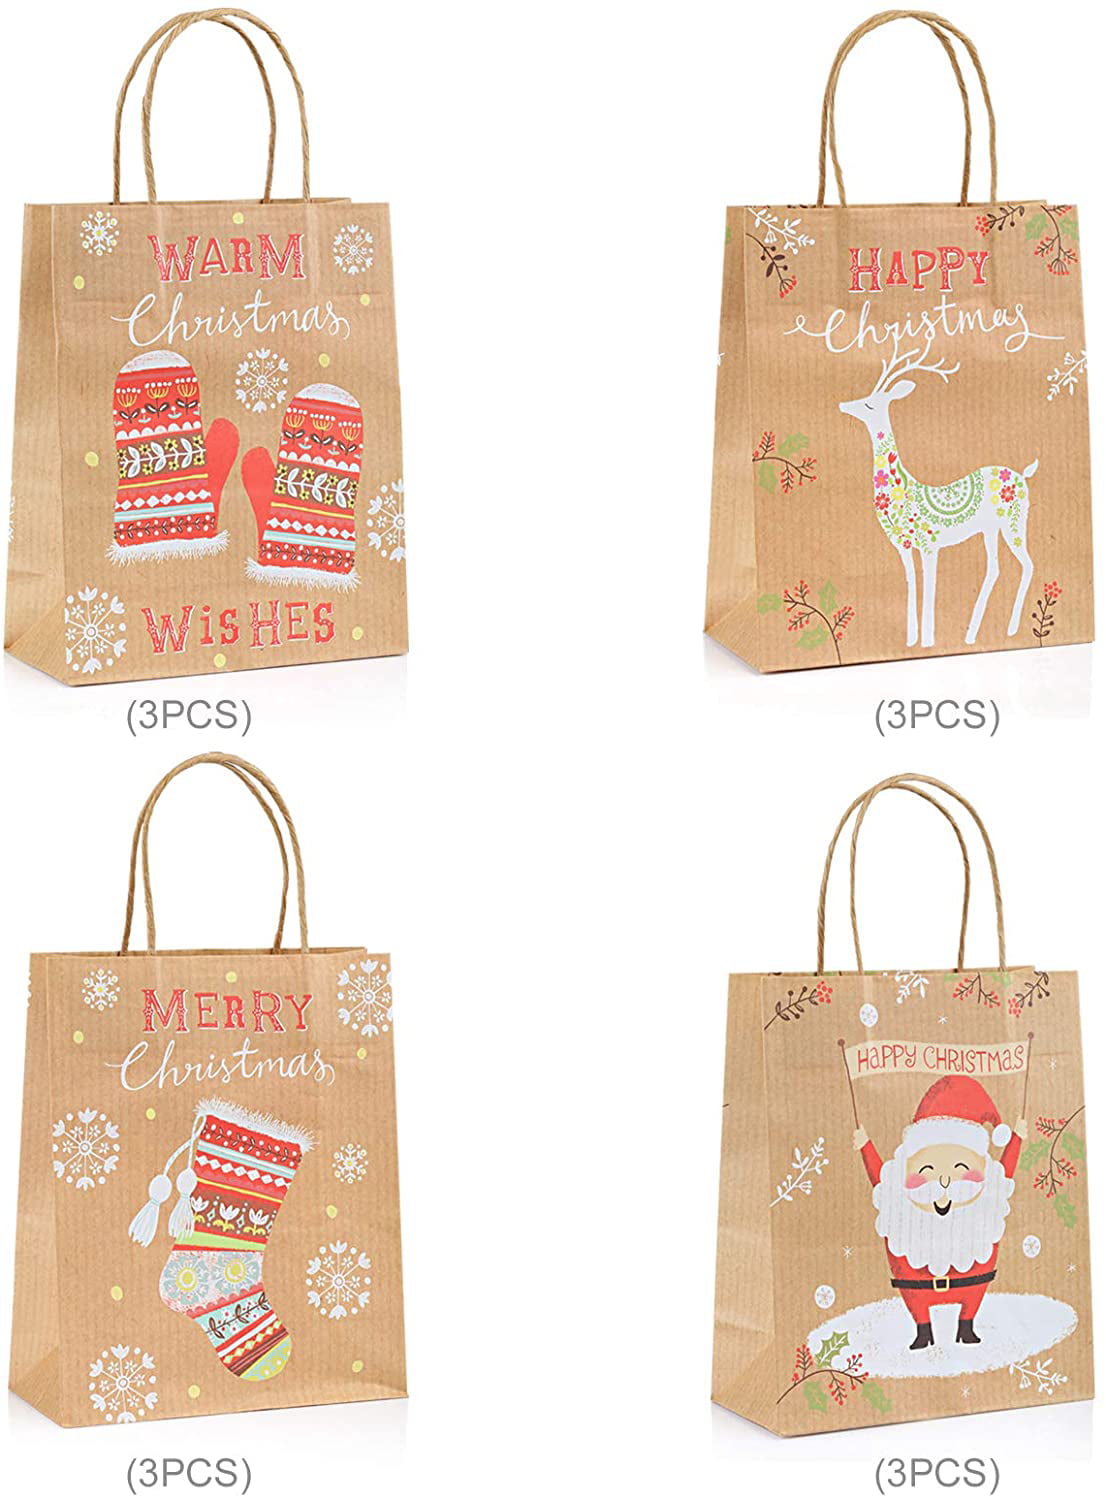 1-3pcs Christmas Gift Bags Kraft Paper Bag w/Handle Kids Party Xmas Shopping Bag 